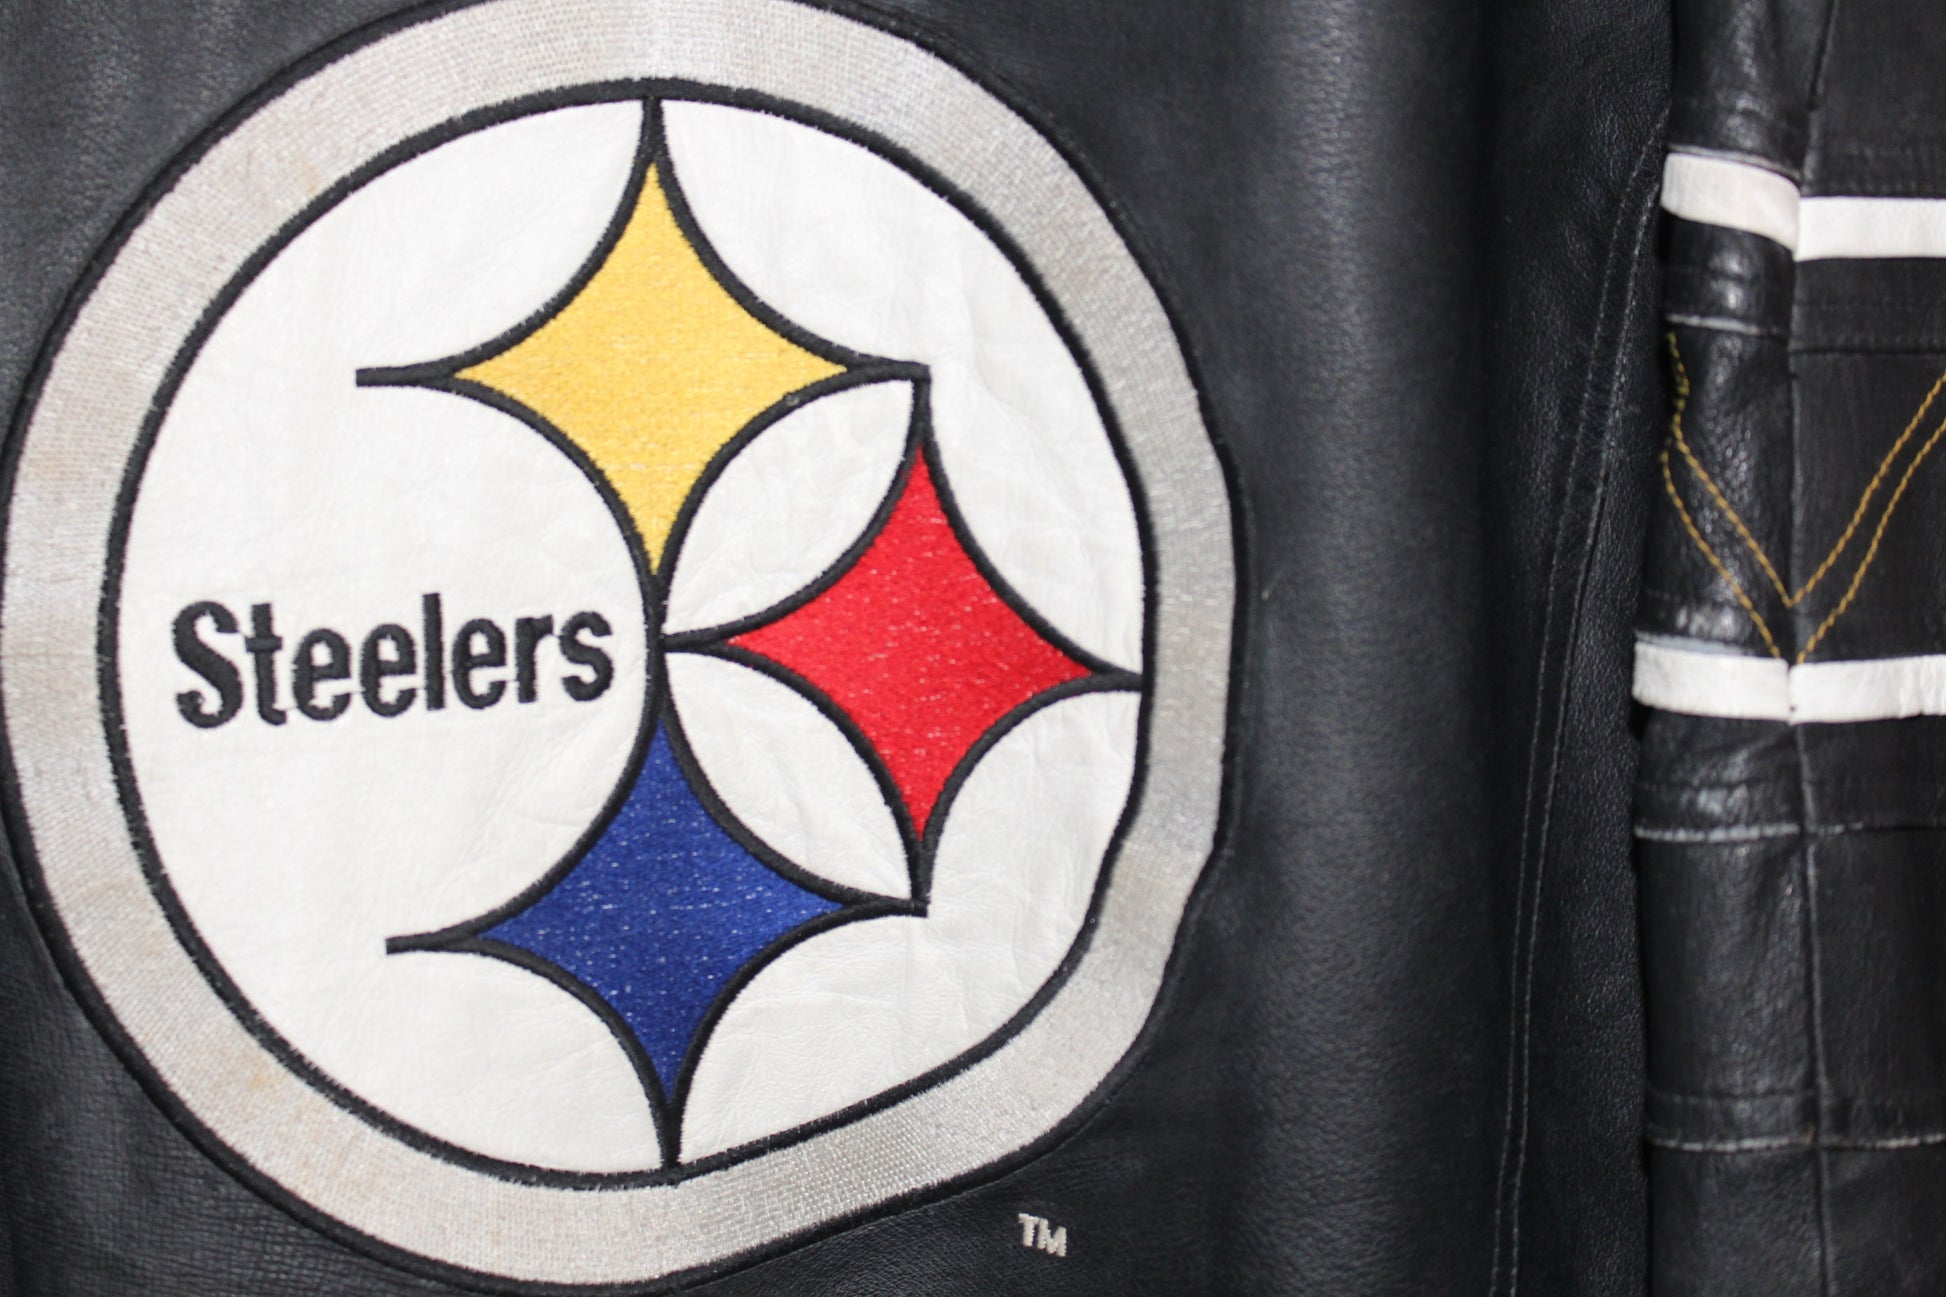 Steelers Leather Jacket - RockStar Jacket